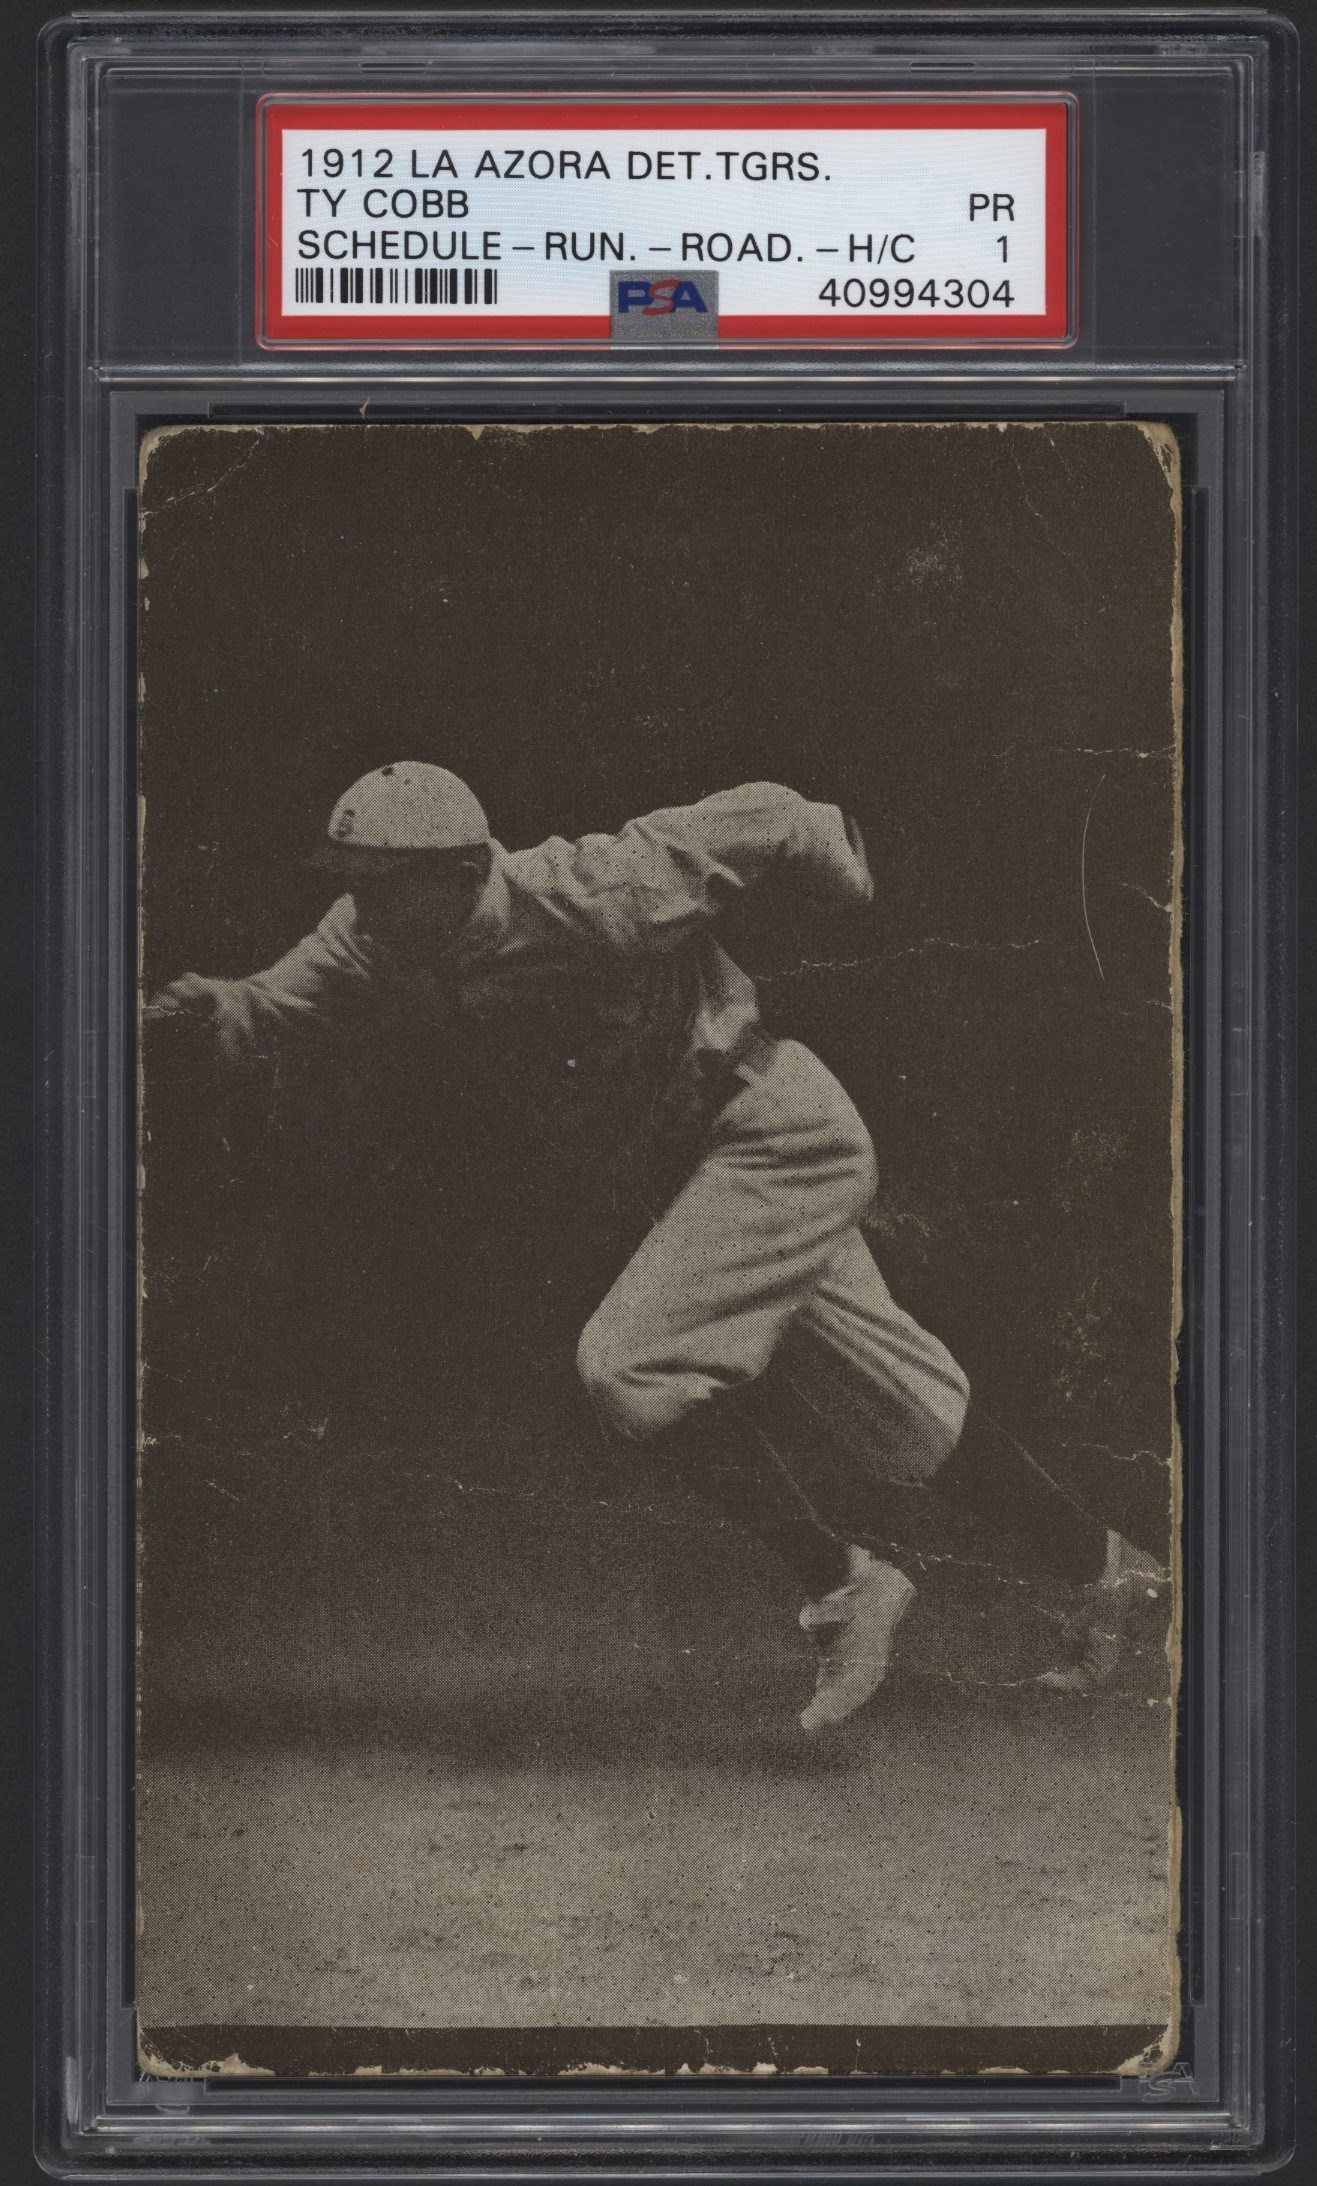 Best of the Best - 1912 Ty Cobb La Azora Detroit Tigers Postcard Schedule (PSA